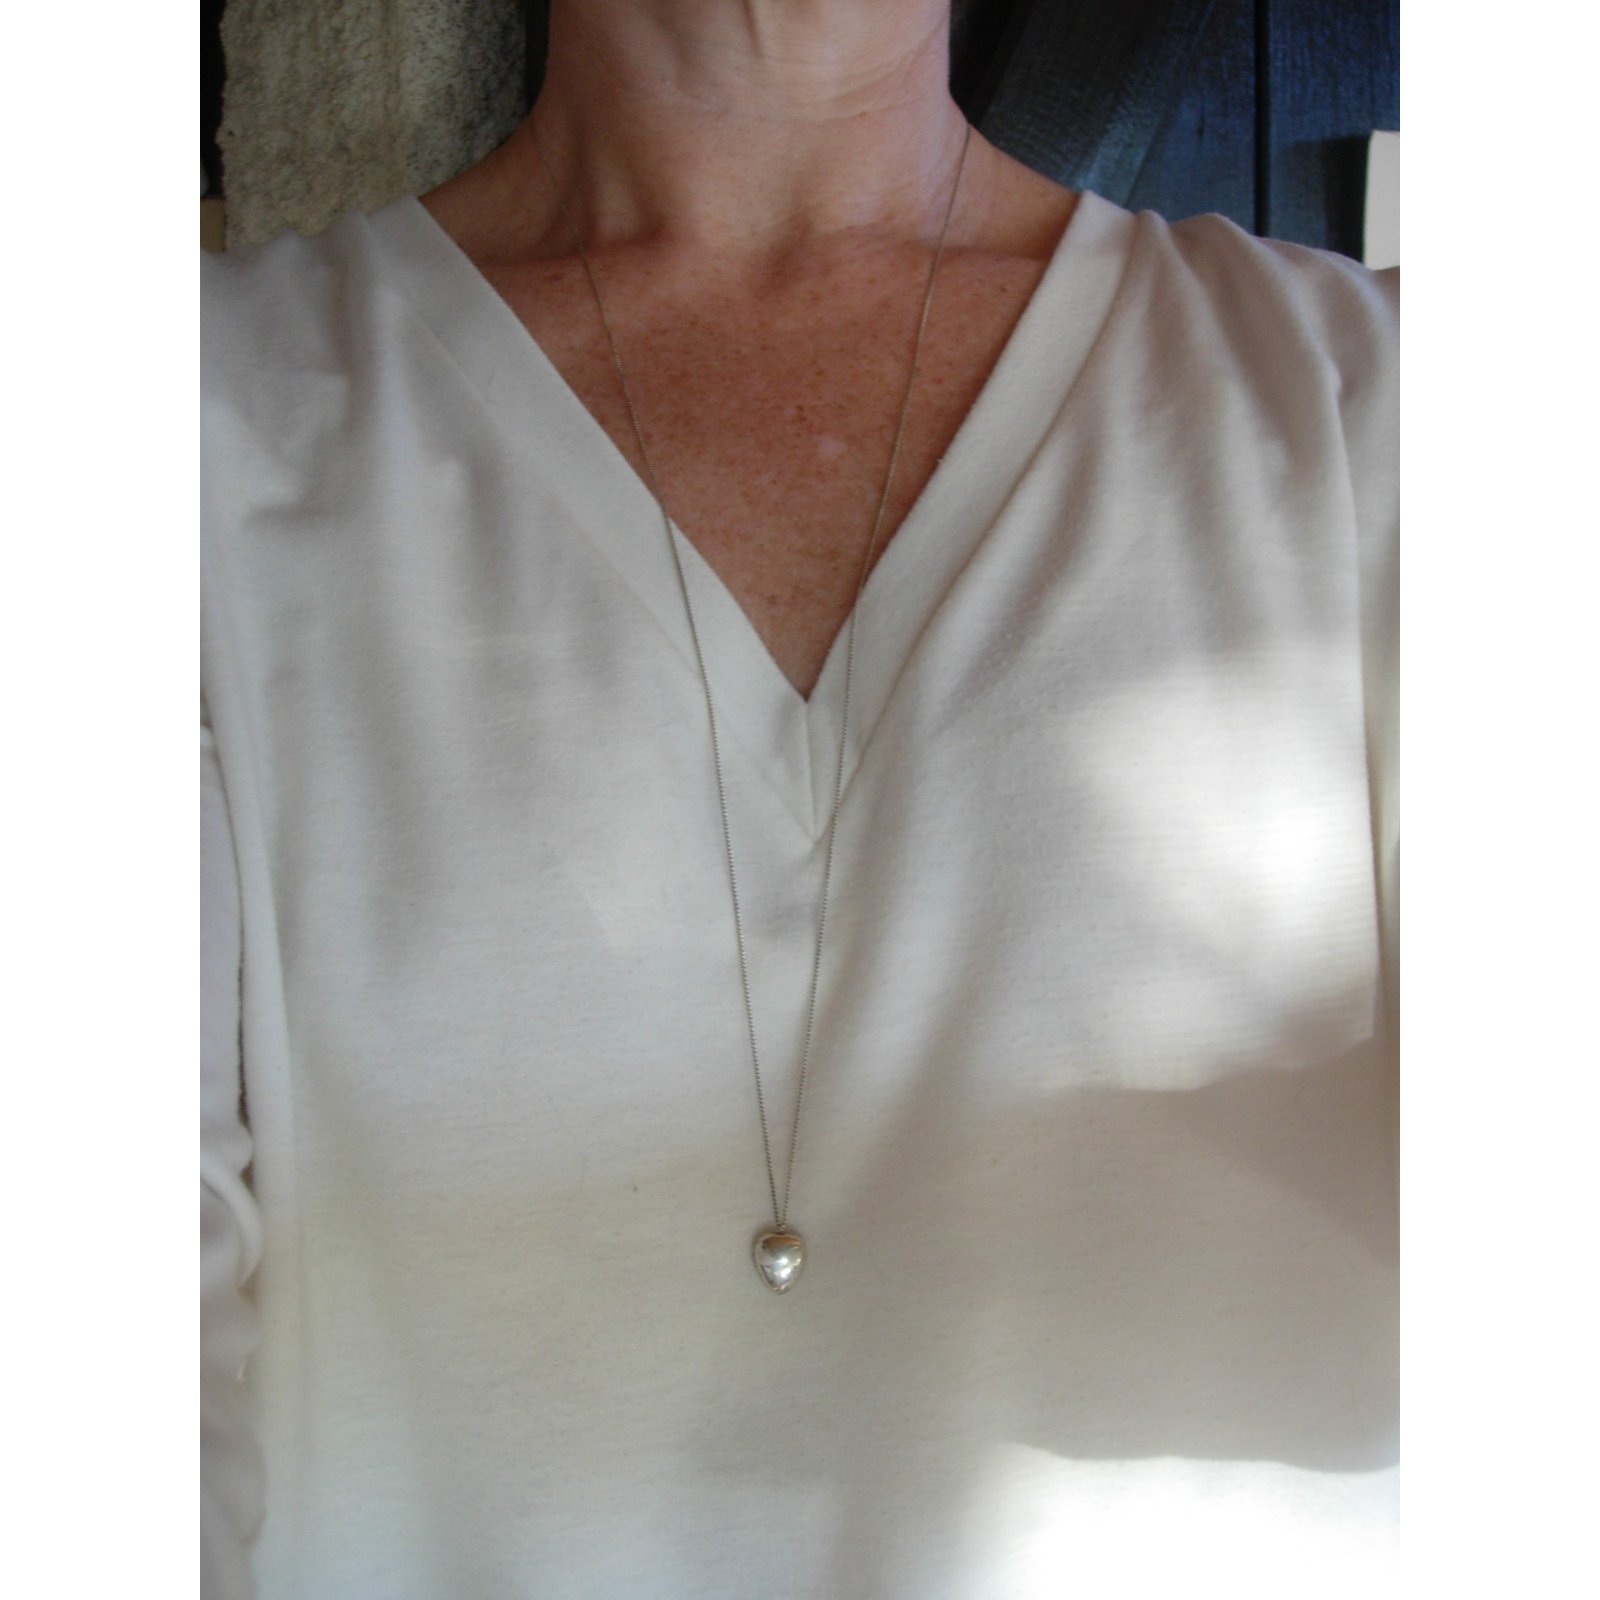 tiffany long silver necklace